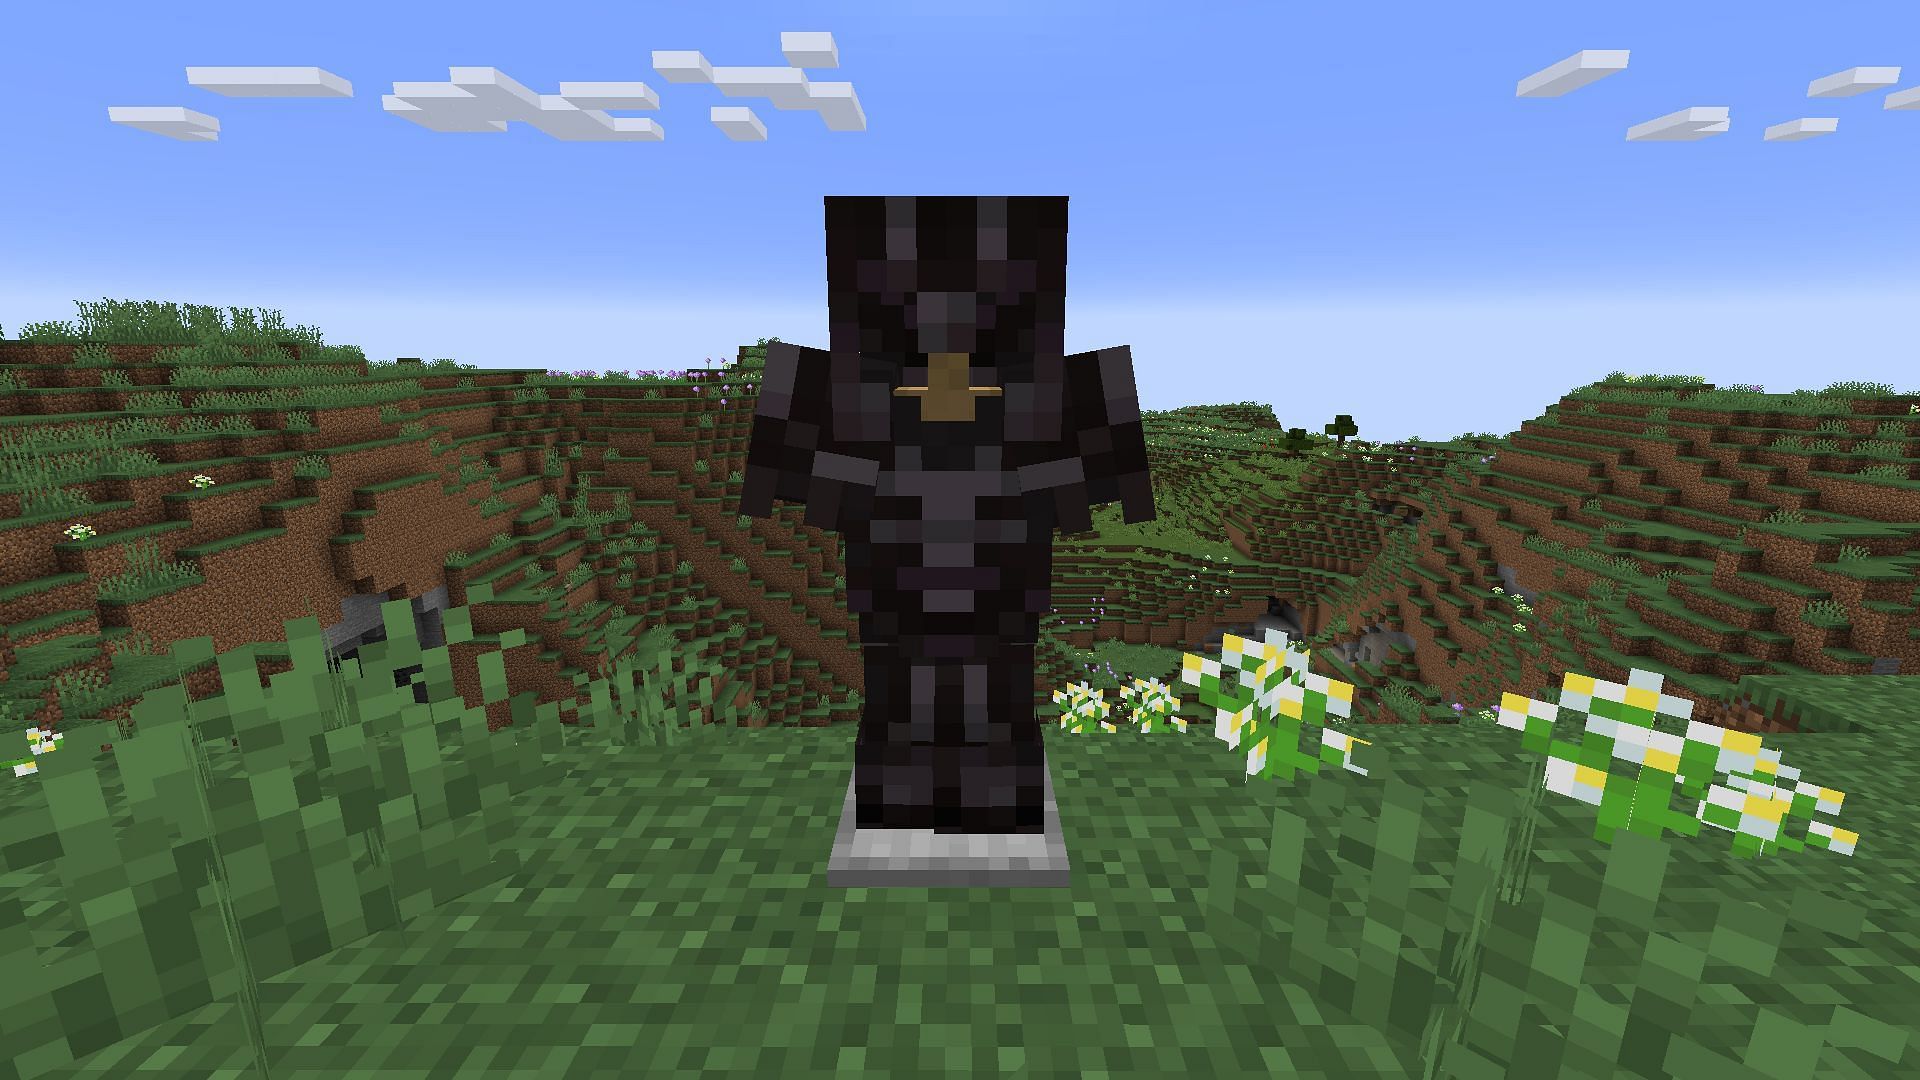 This netherite armor utilizes Minecraft